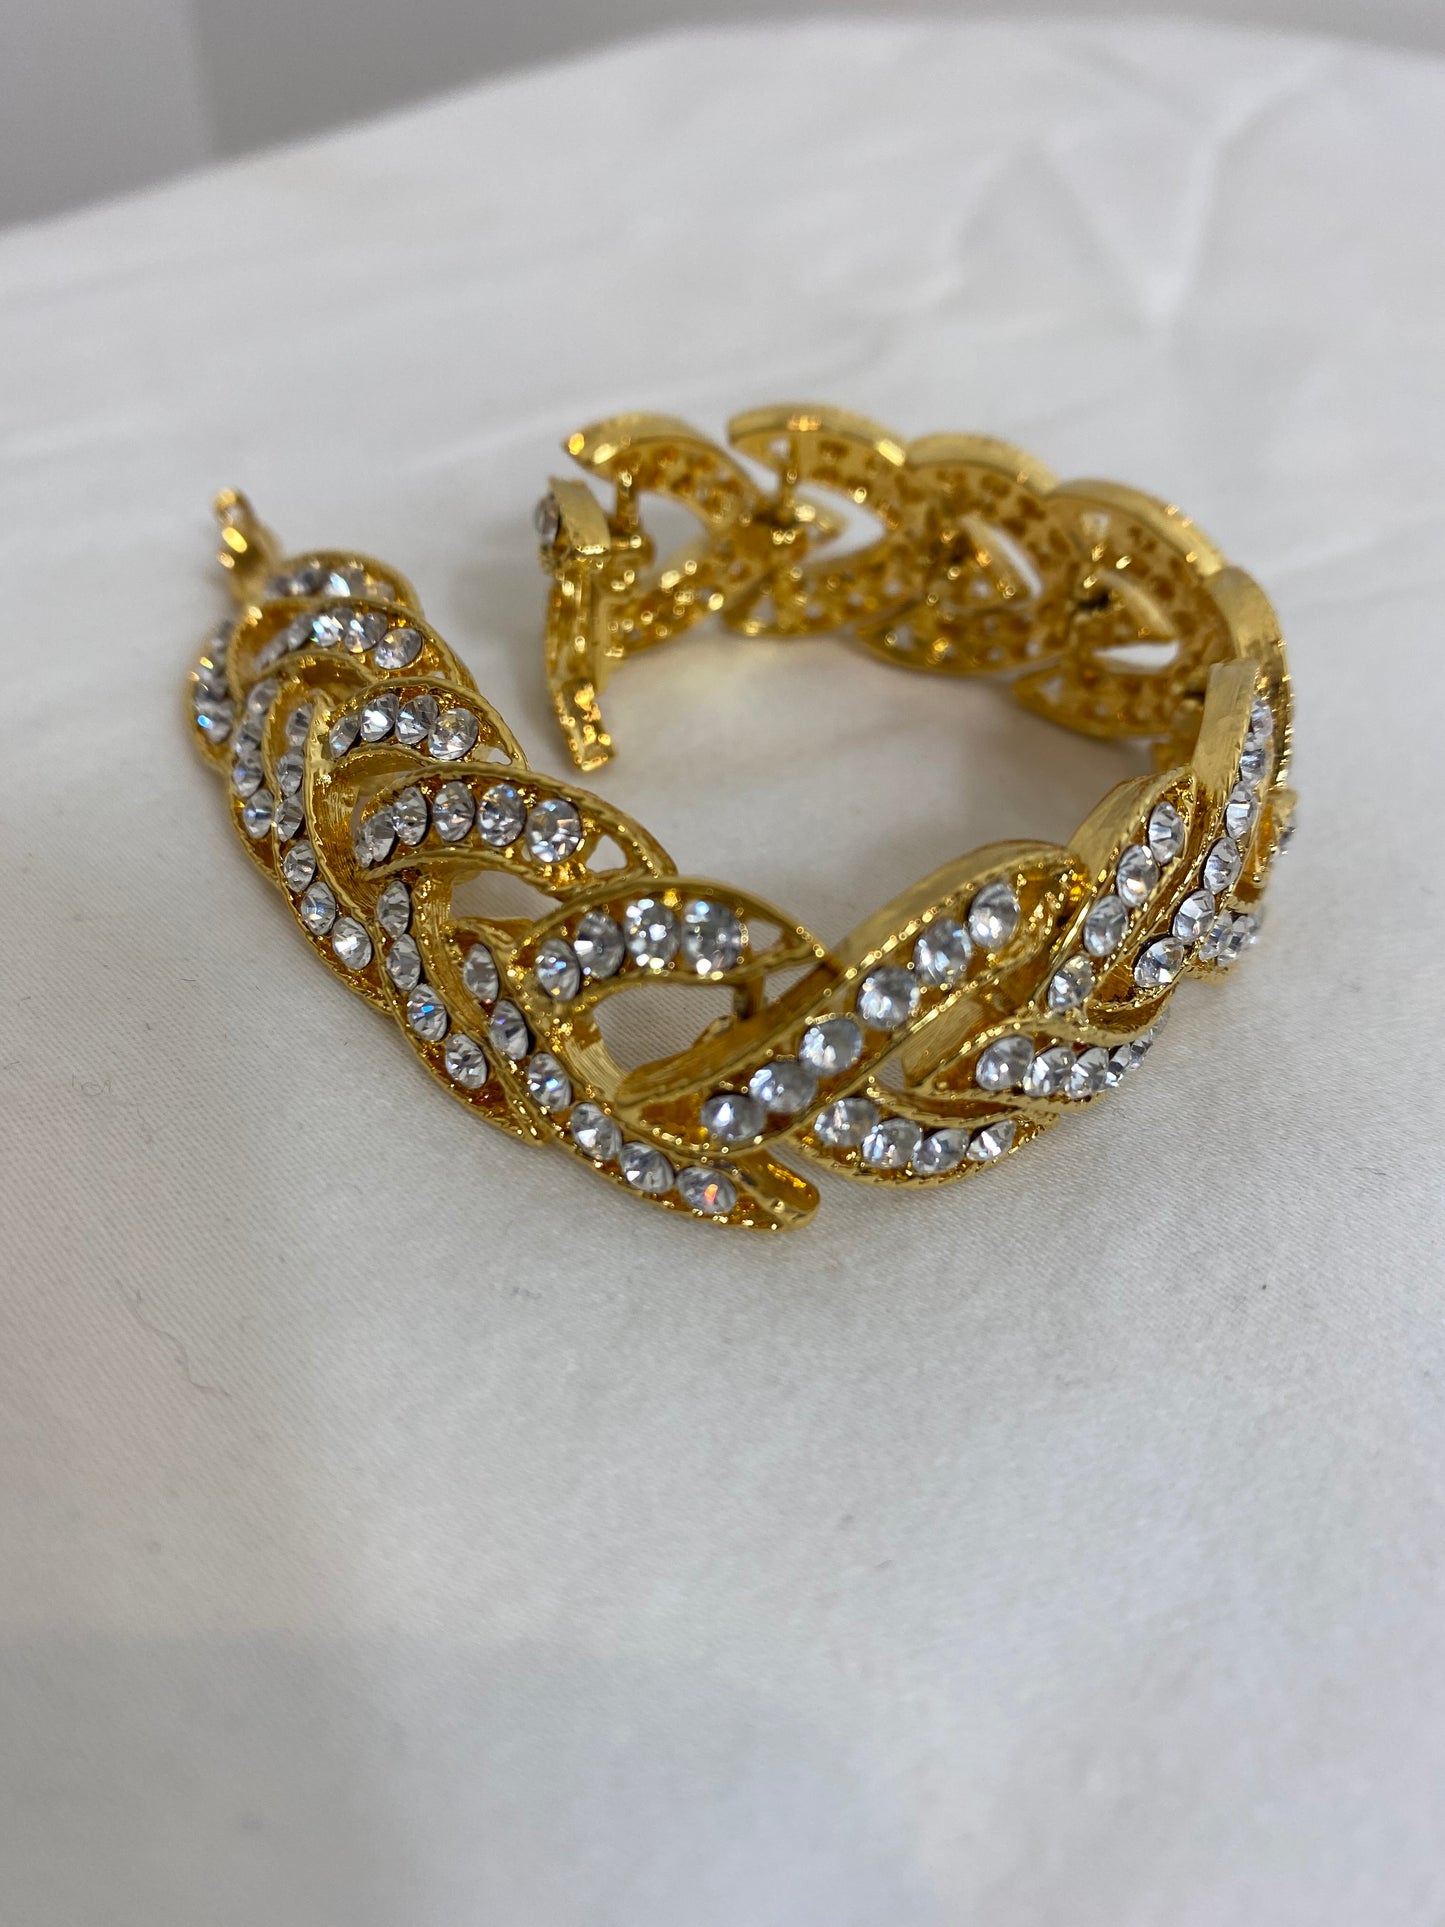 Pretty little faux diamond bracelet